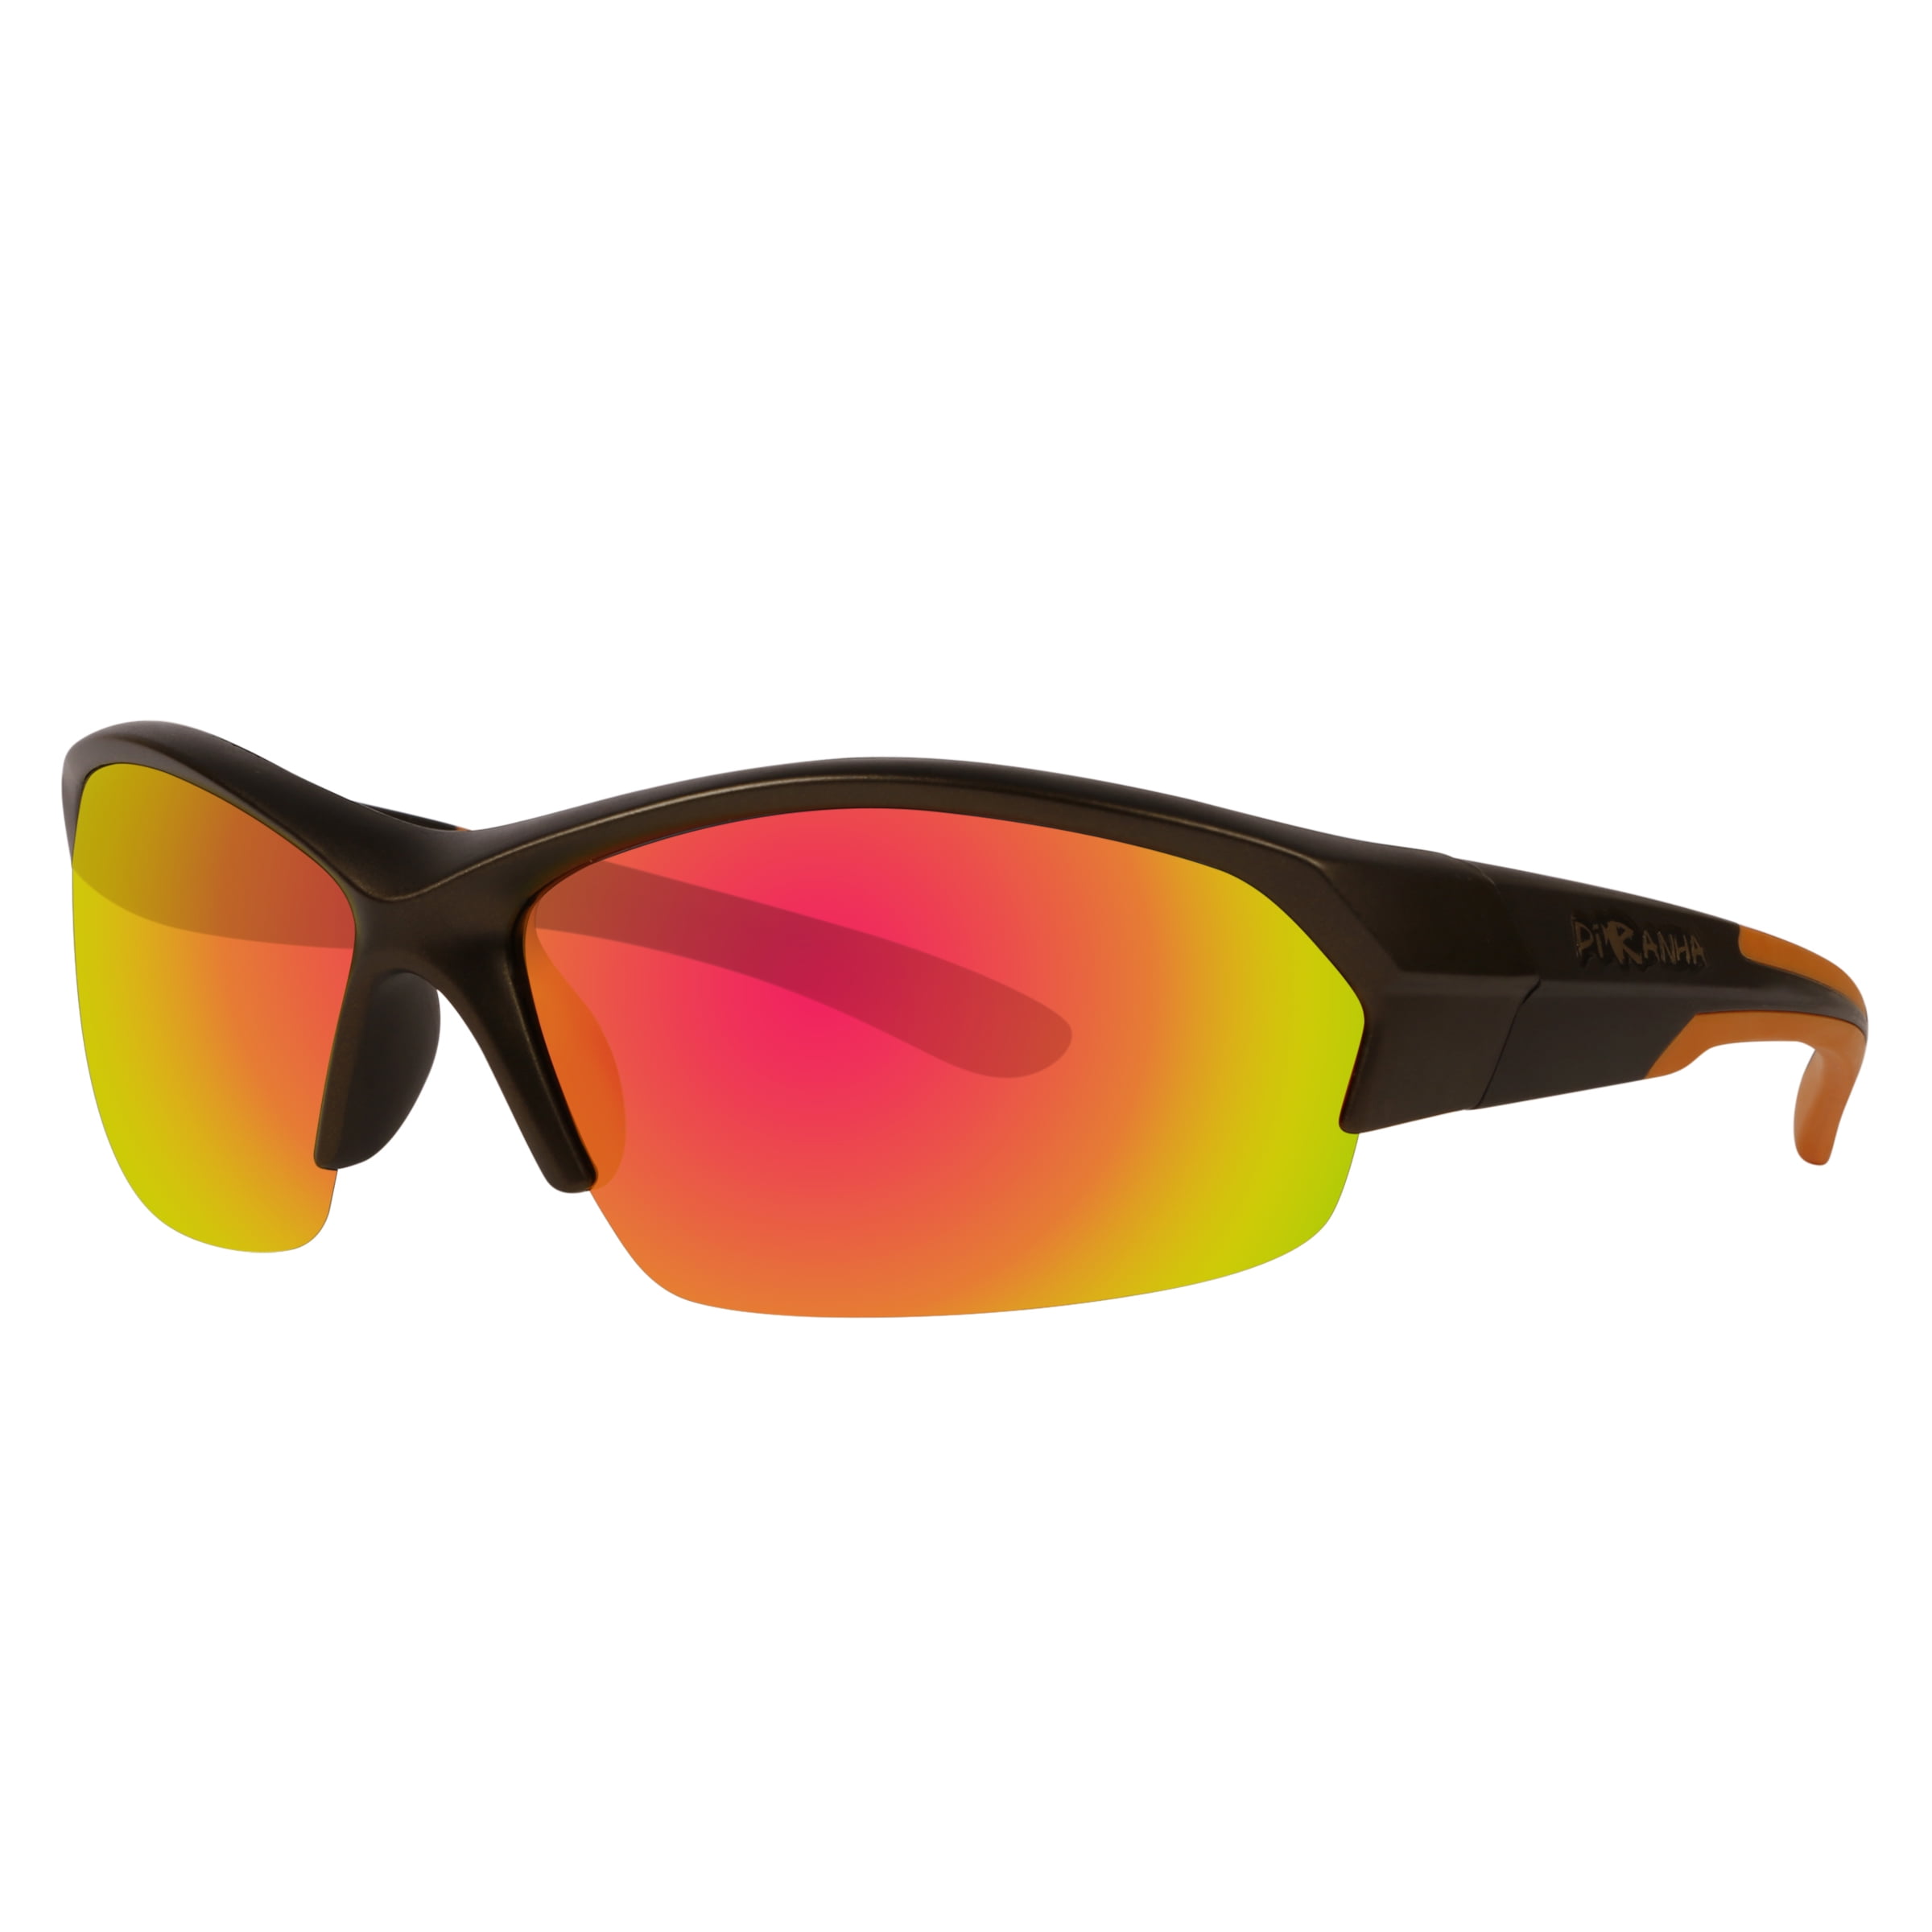 Piranha Eyewear Infinity Orange and Black Half Frame Sports